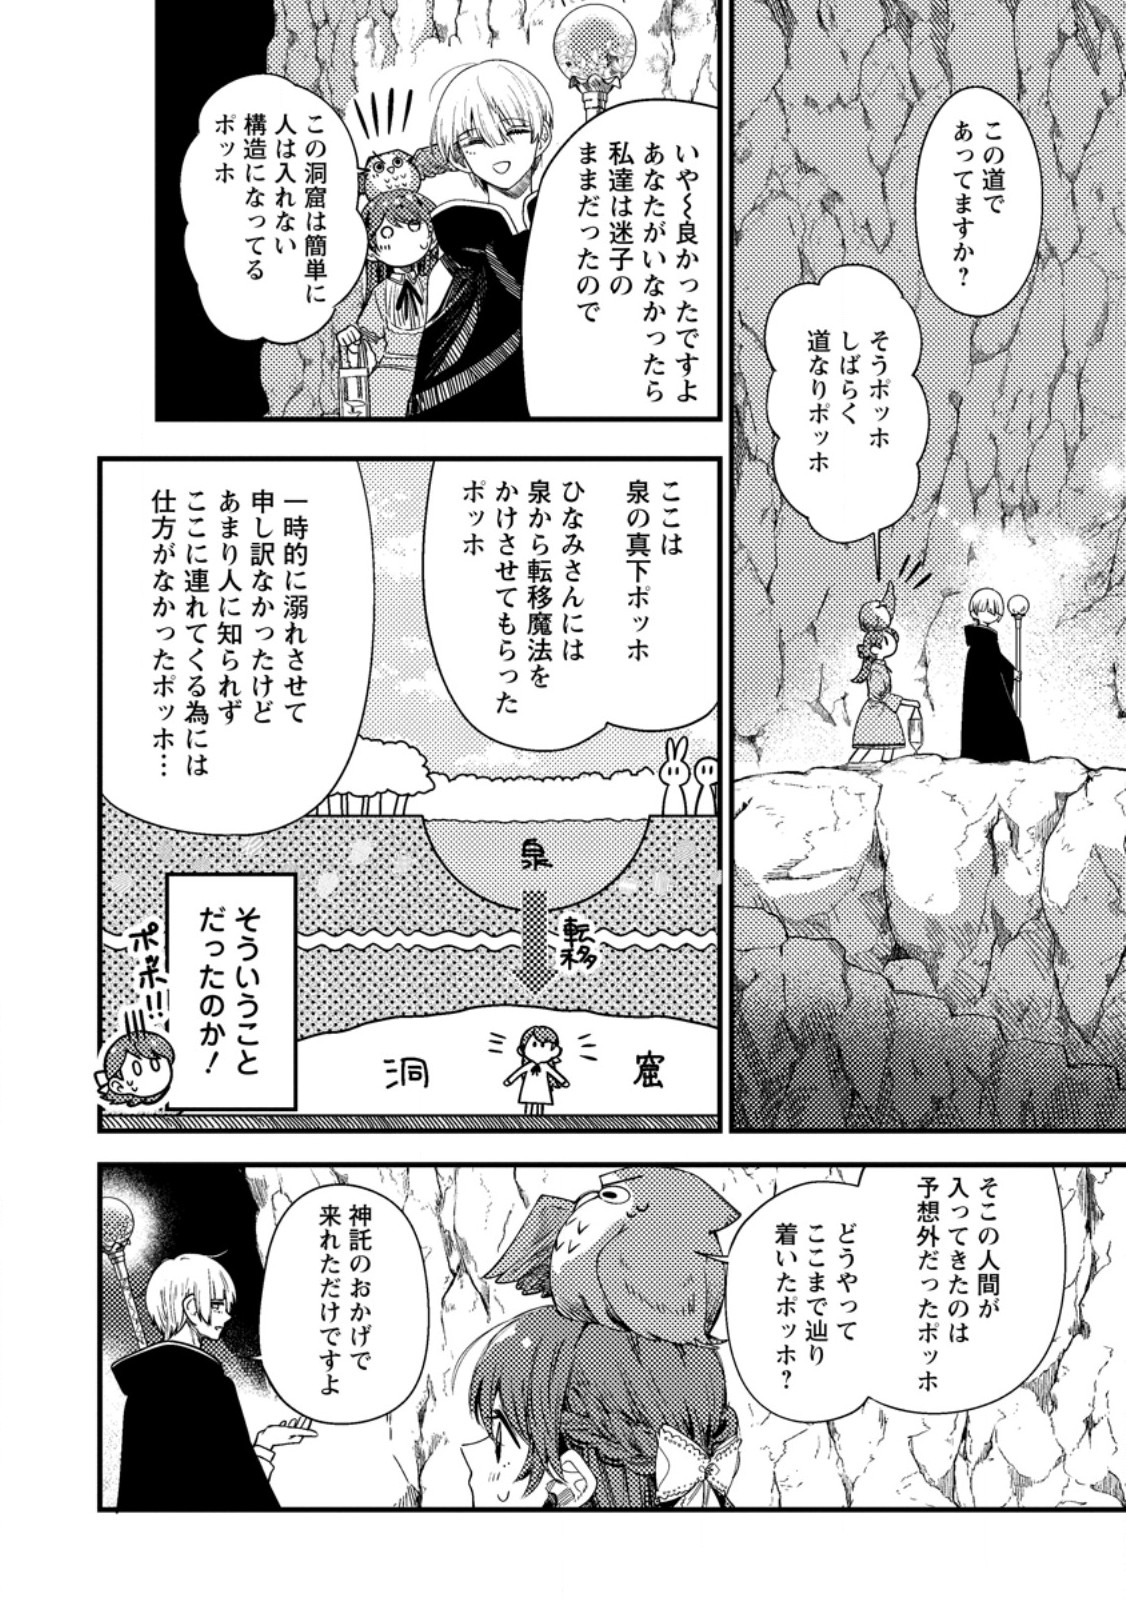 Hakoniwa no Yakujutsushi - Chapter 36.2 - Page 2